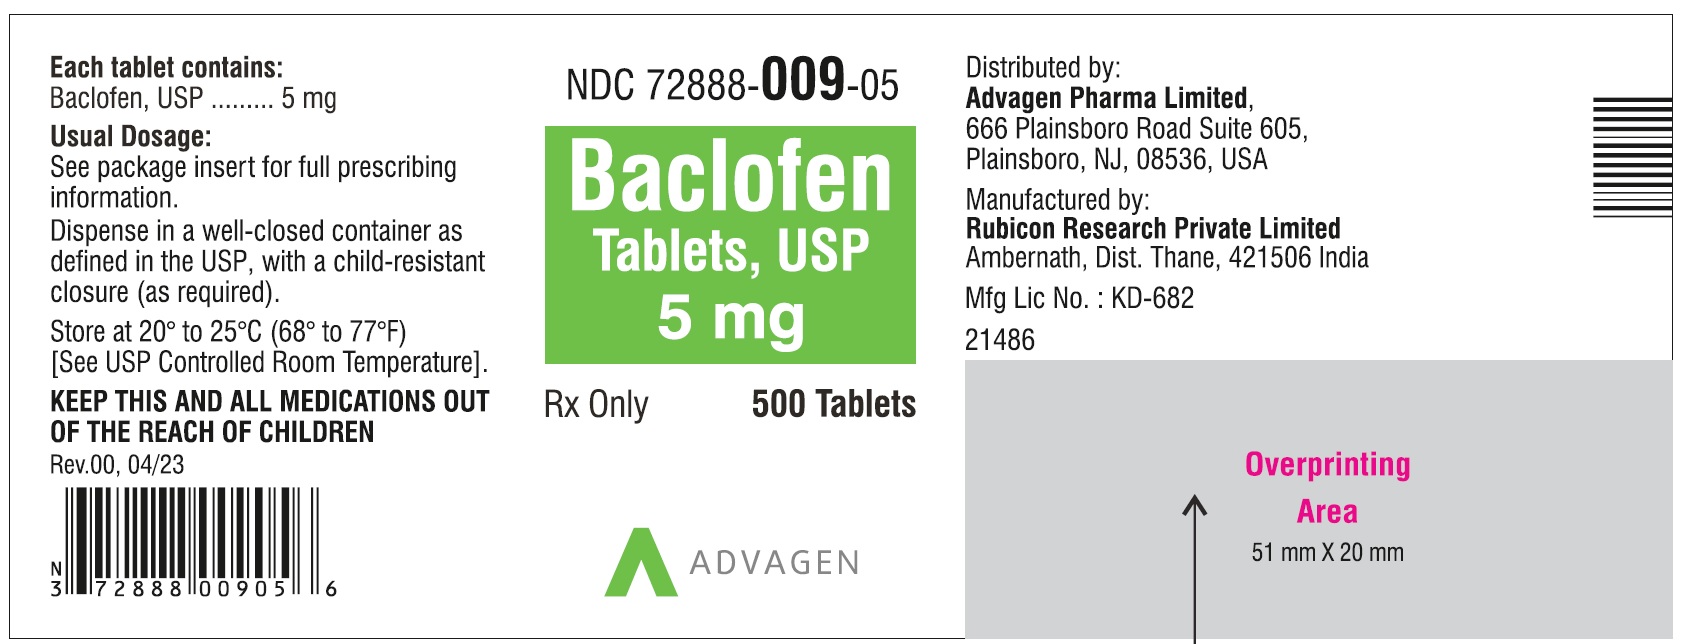 NDC 72888-009-05 - Baclofen Tablets, USP 5 mg - 500 Tablets